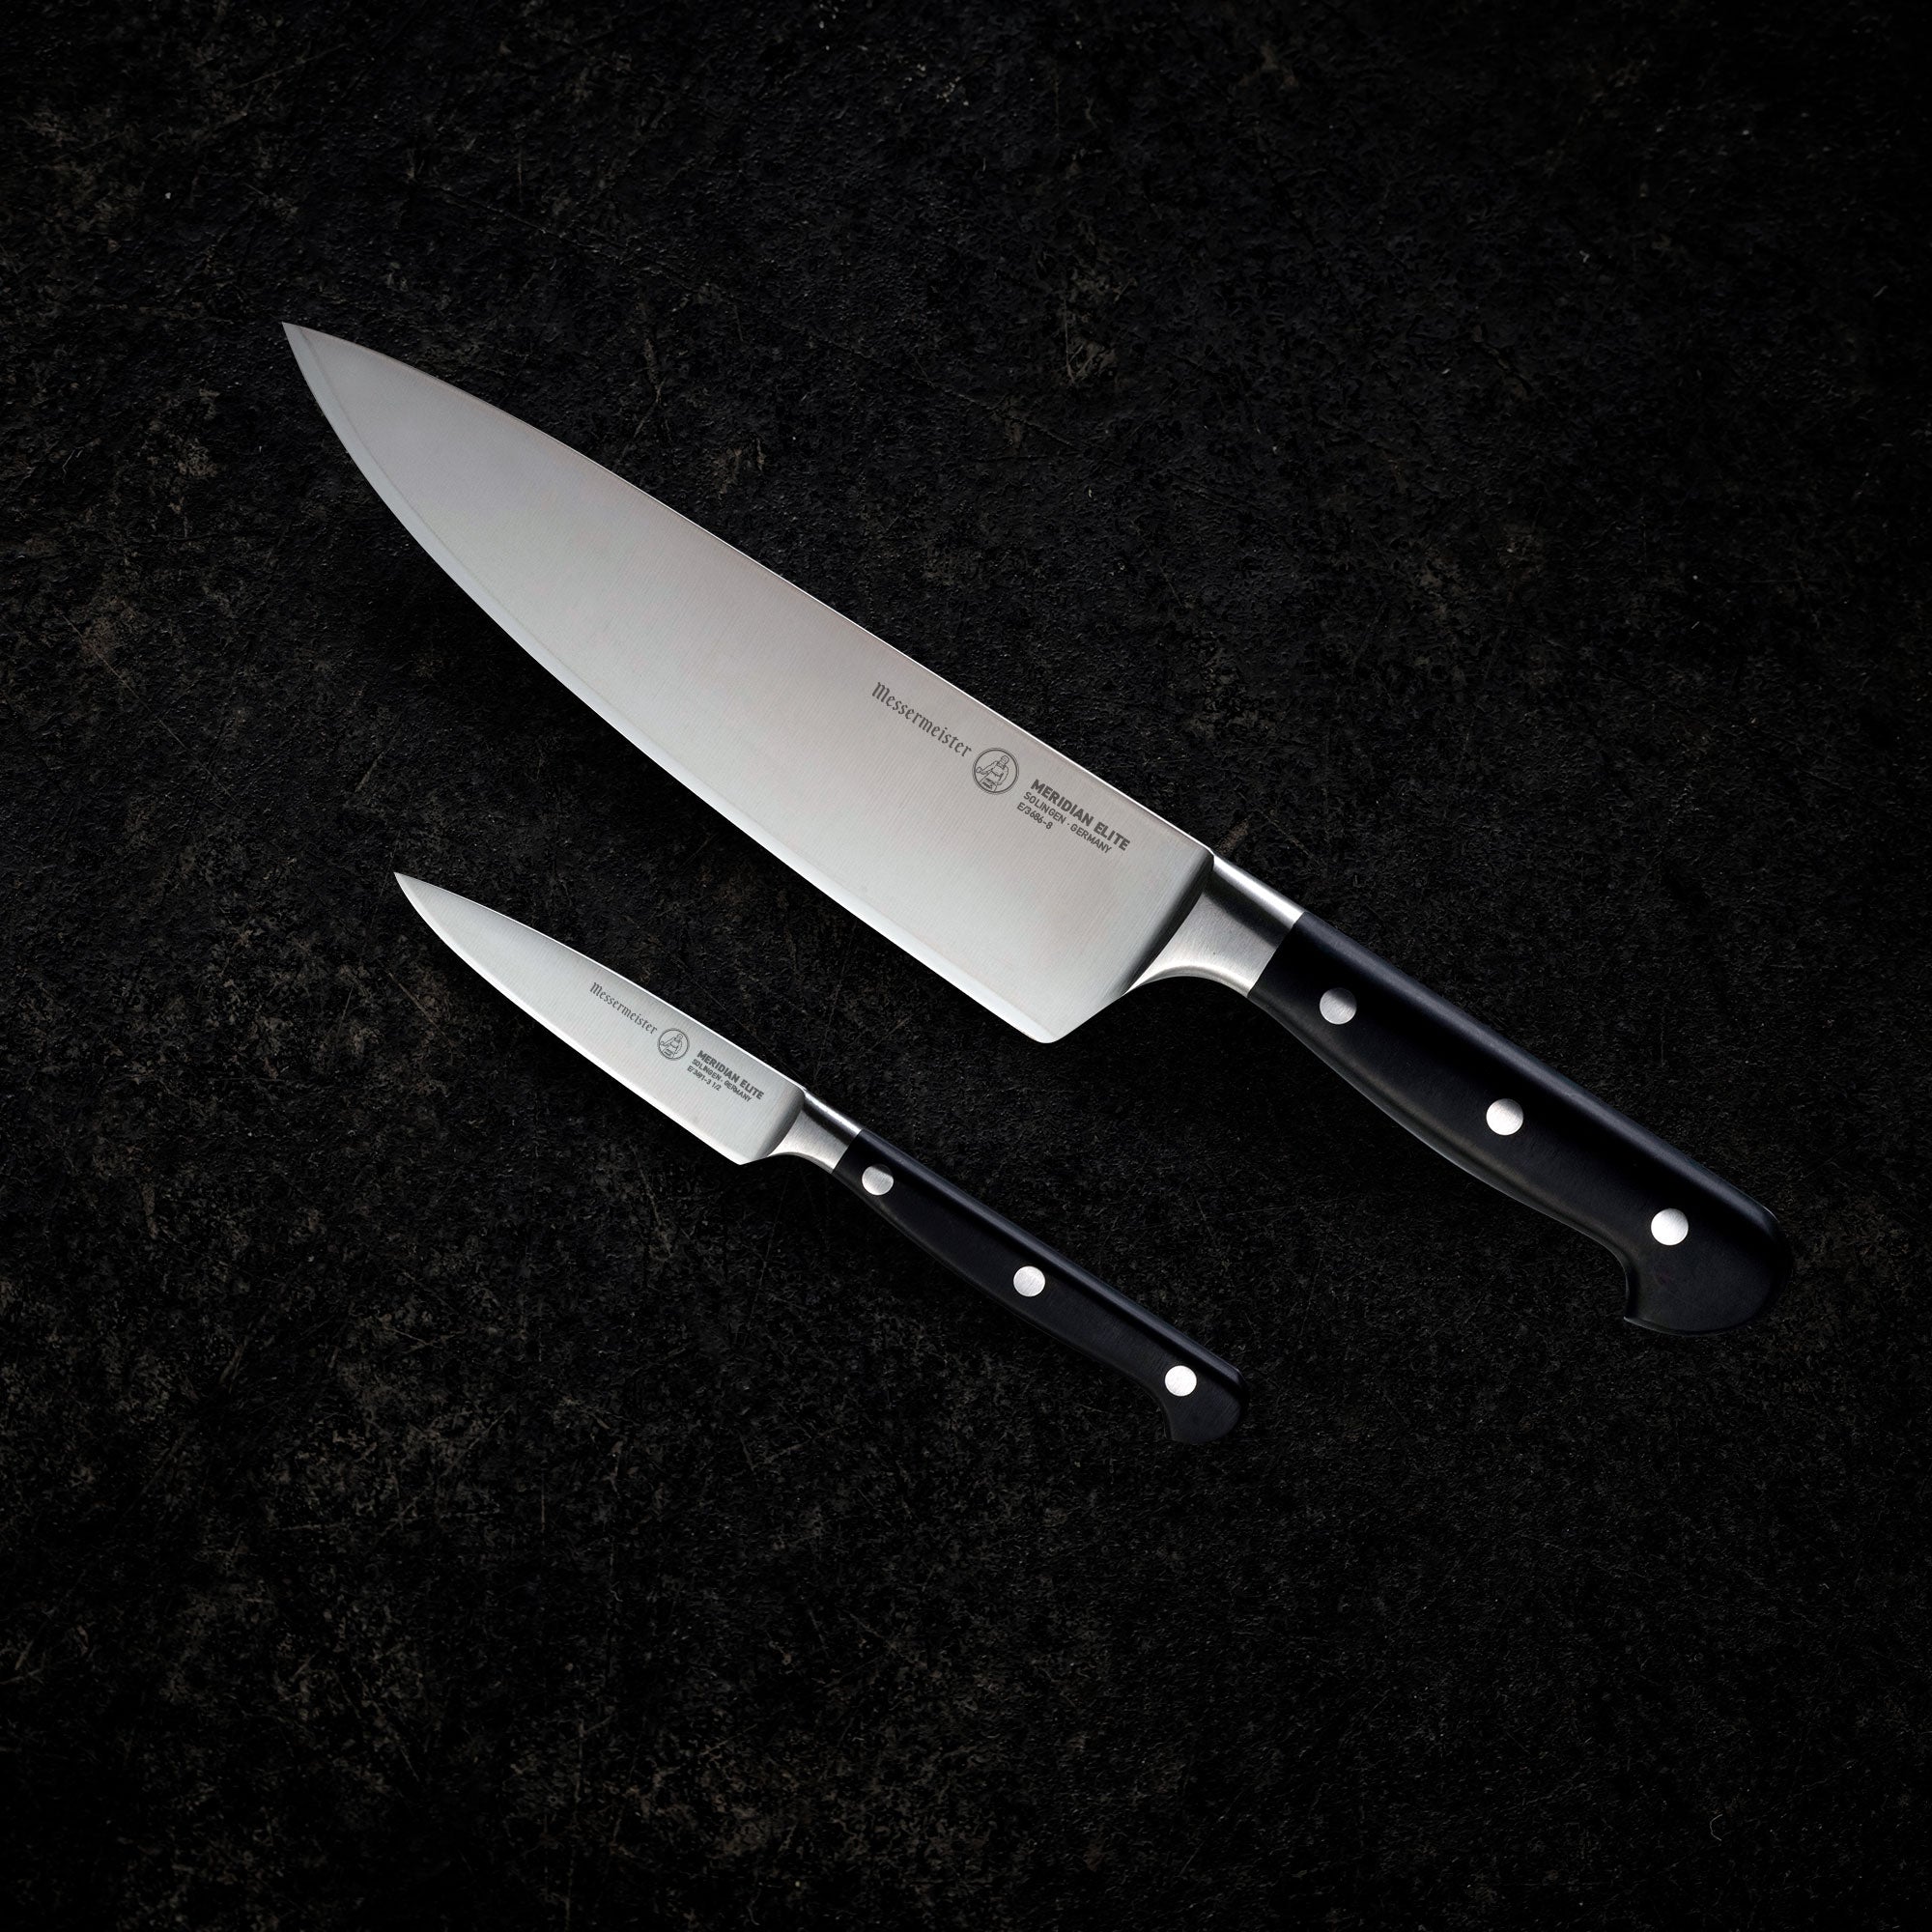 Home Hero Kitchen Knife Set & Steak Knife Set - 8-Pcs Ultra-Sharp